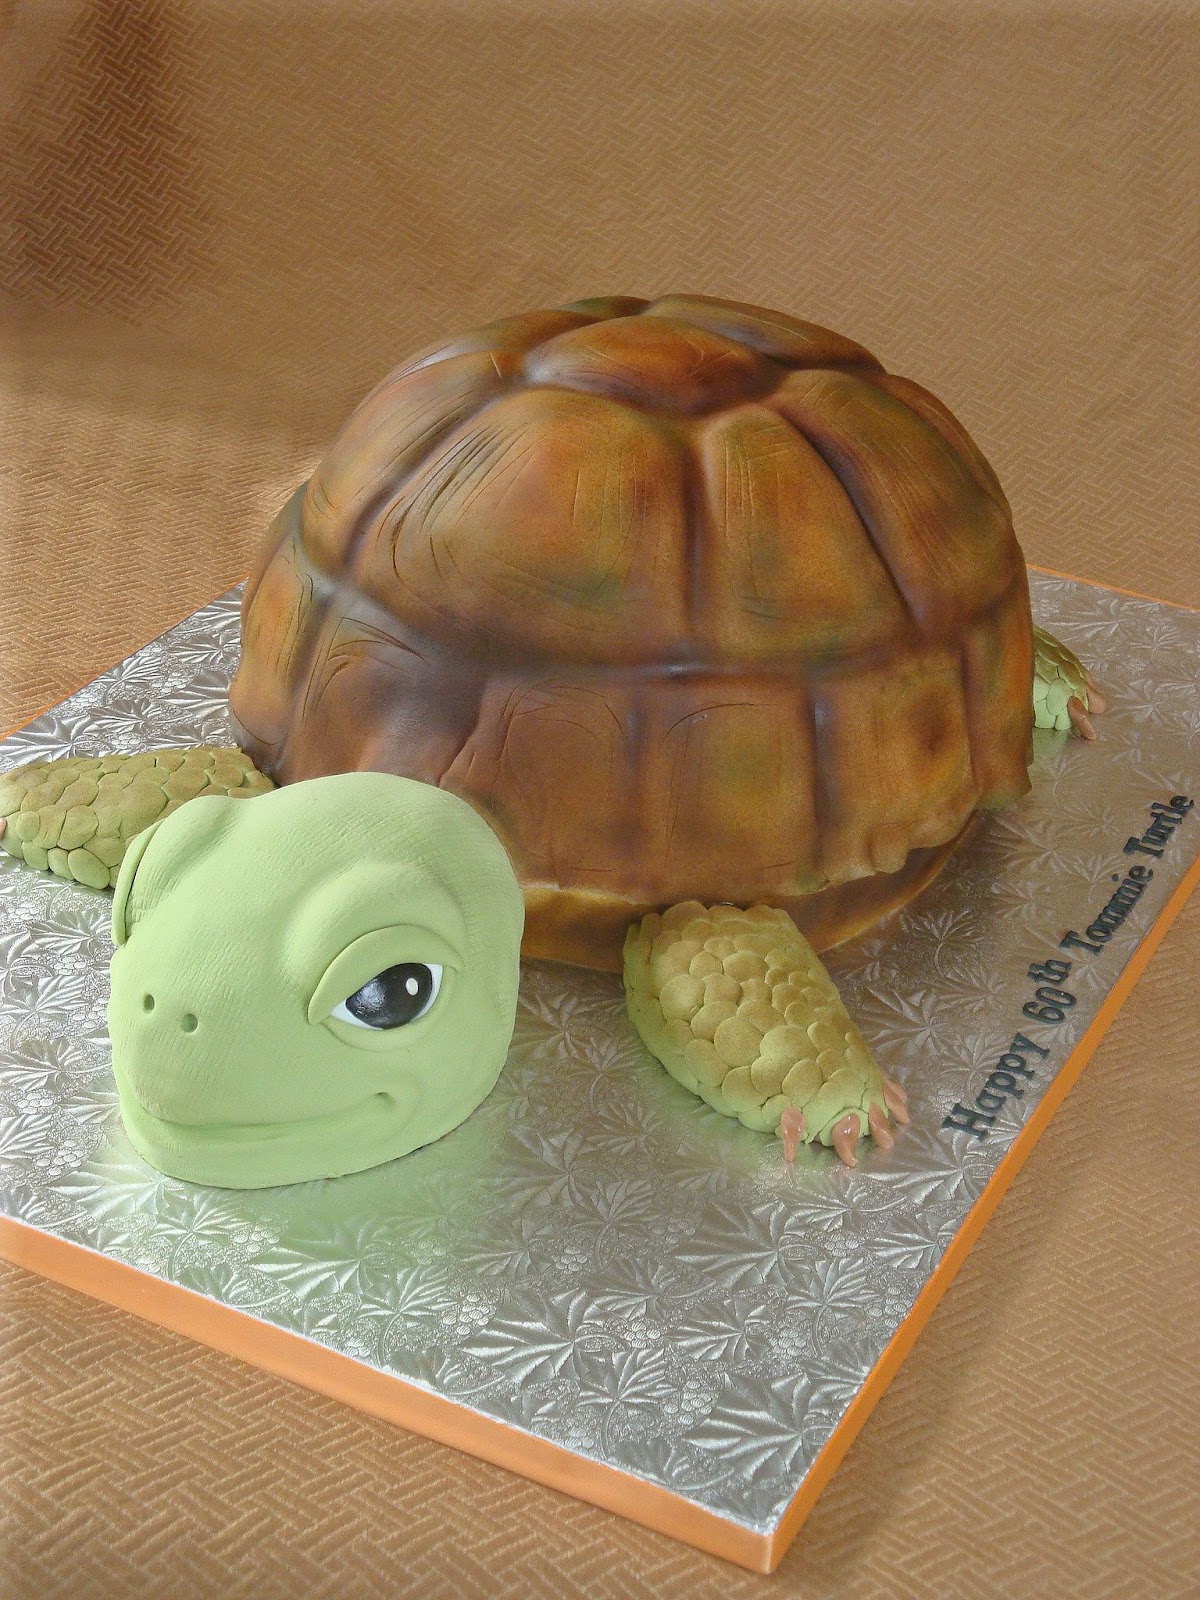 turtle shaped cake